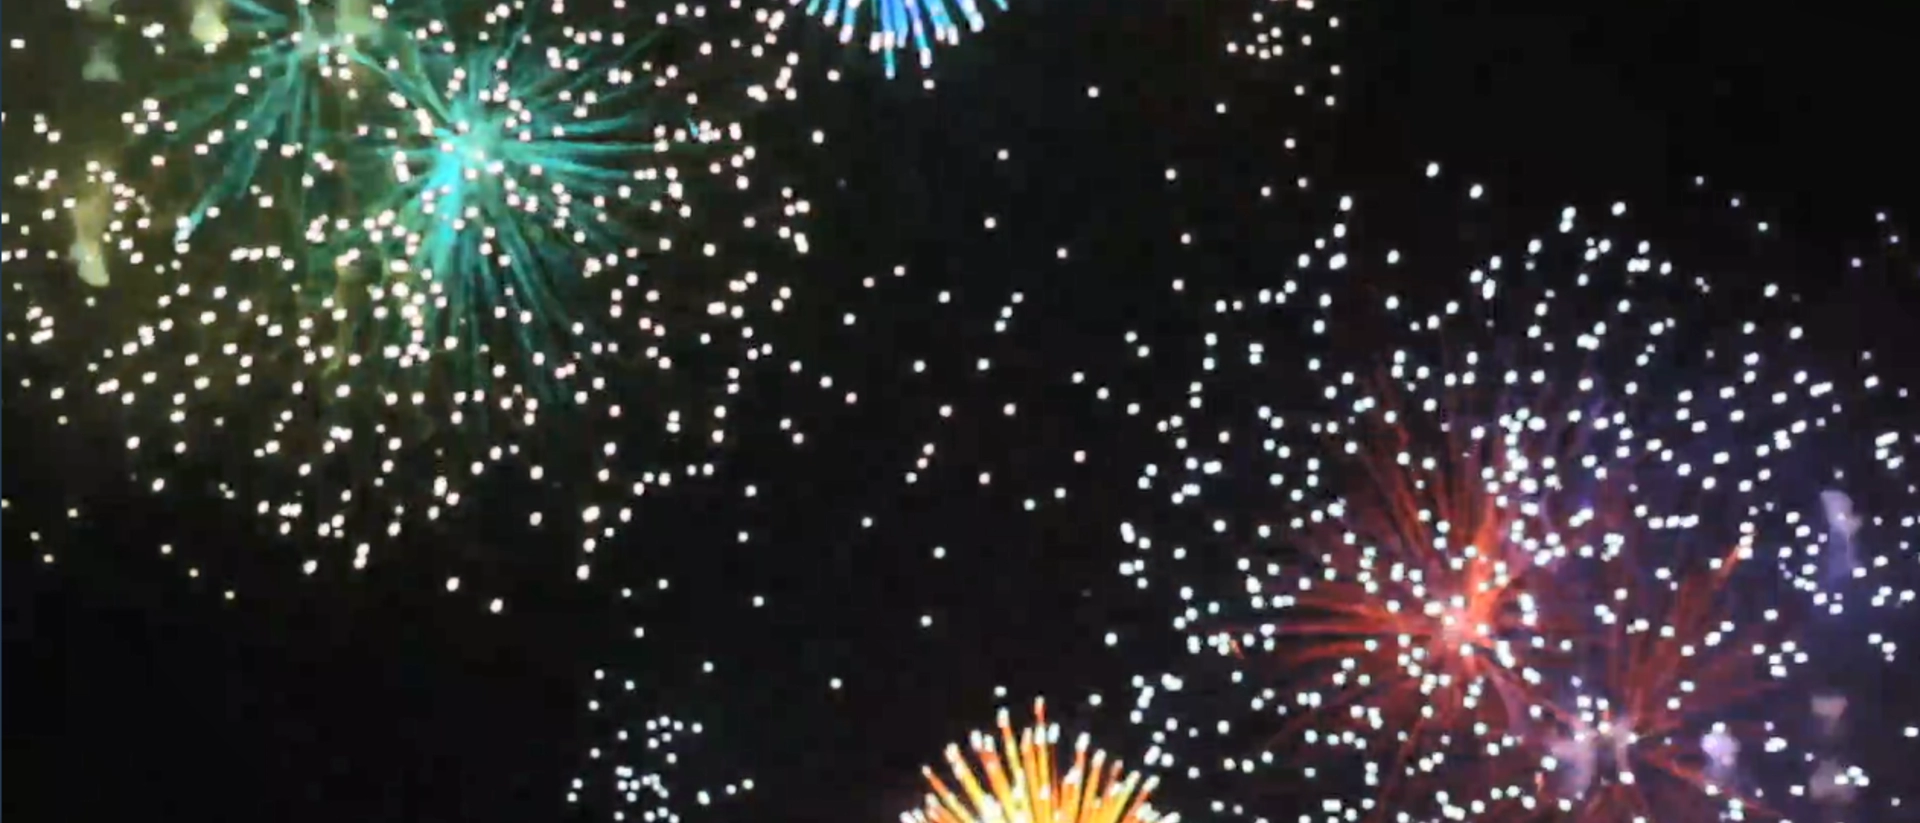 Image of Fireworks Exploding against a Dark Sky